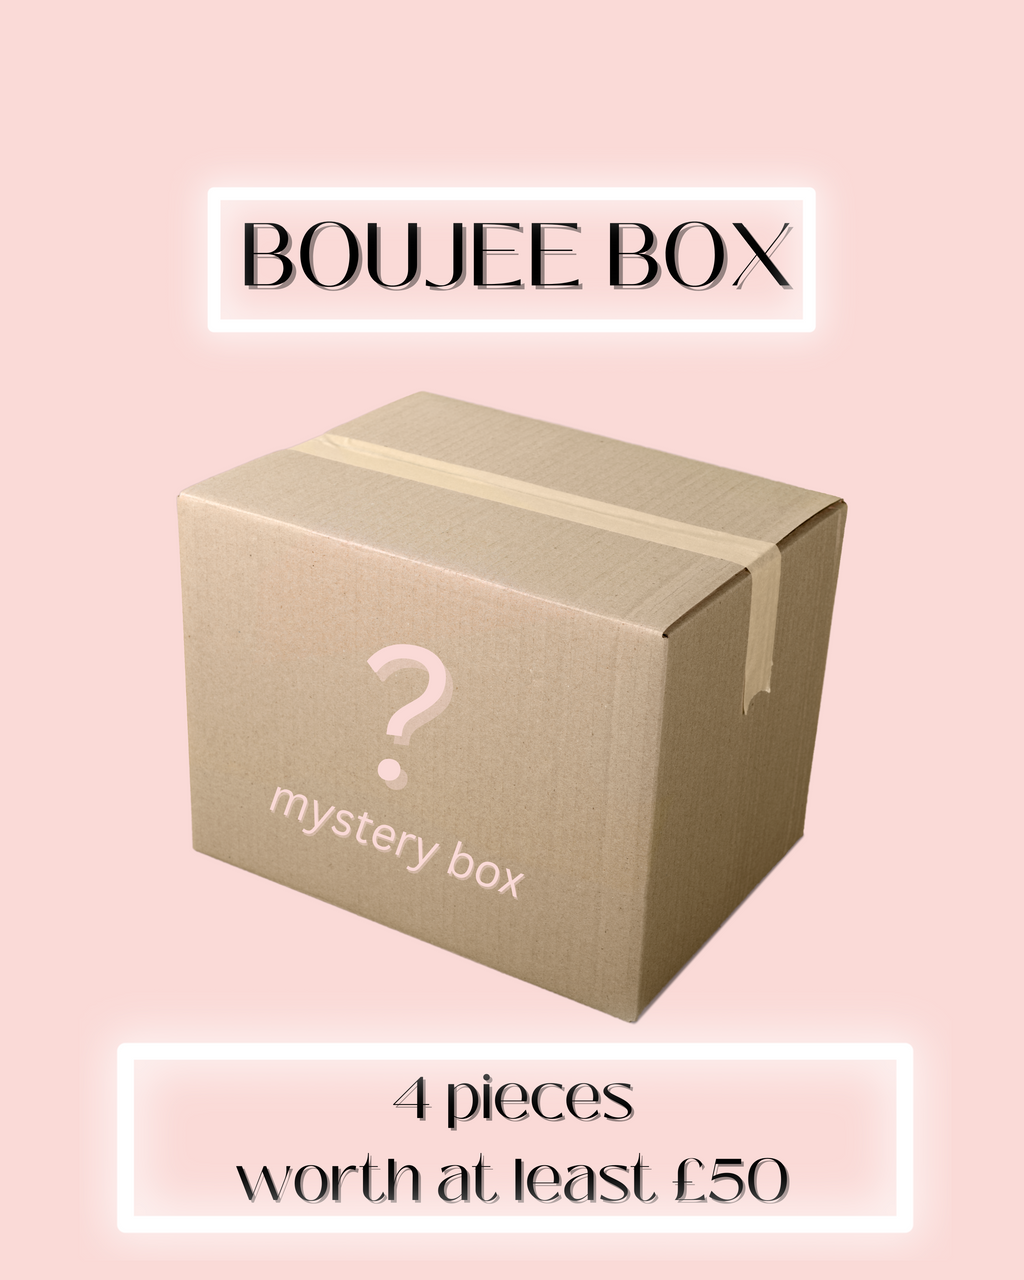 MYSTERY BOX RJC1441 – LuxuryPromise